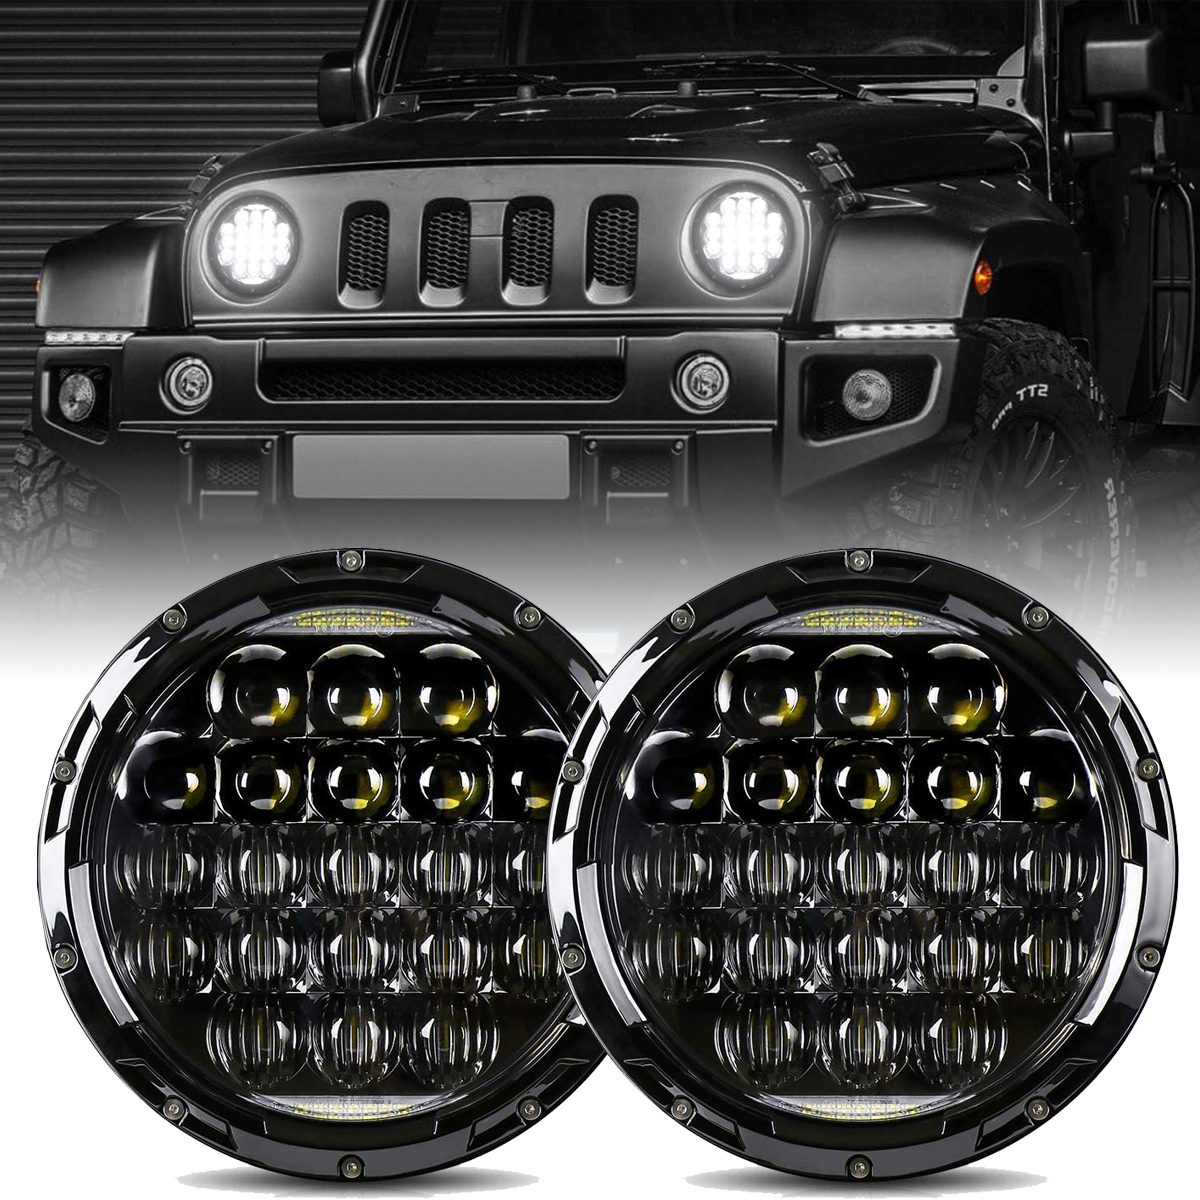 High Brightest 7 LED Headlight For Harley Davidson Motorcycle Projector LED Light Bulb For Jeep Wrangler JK LJ CJ Headlamp Chrome 